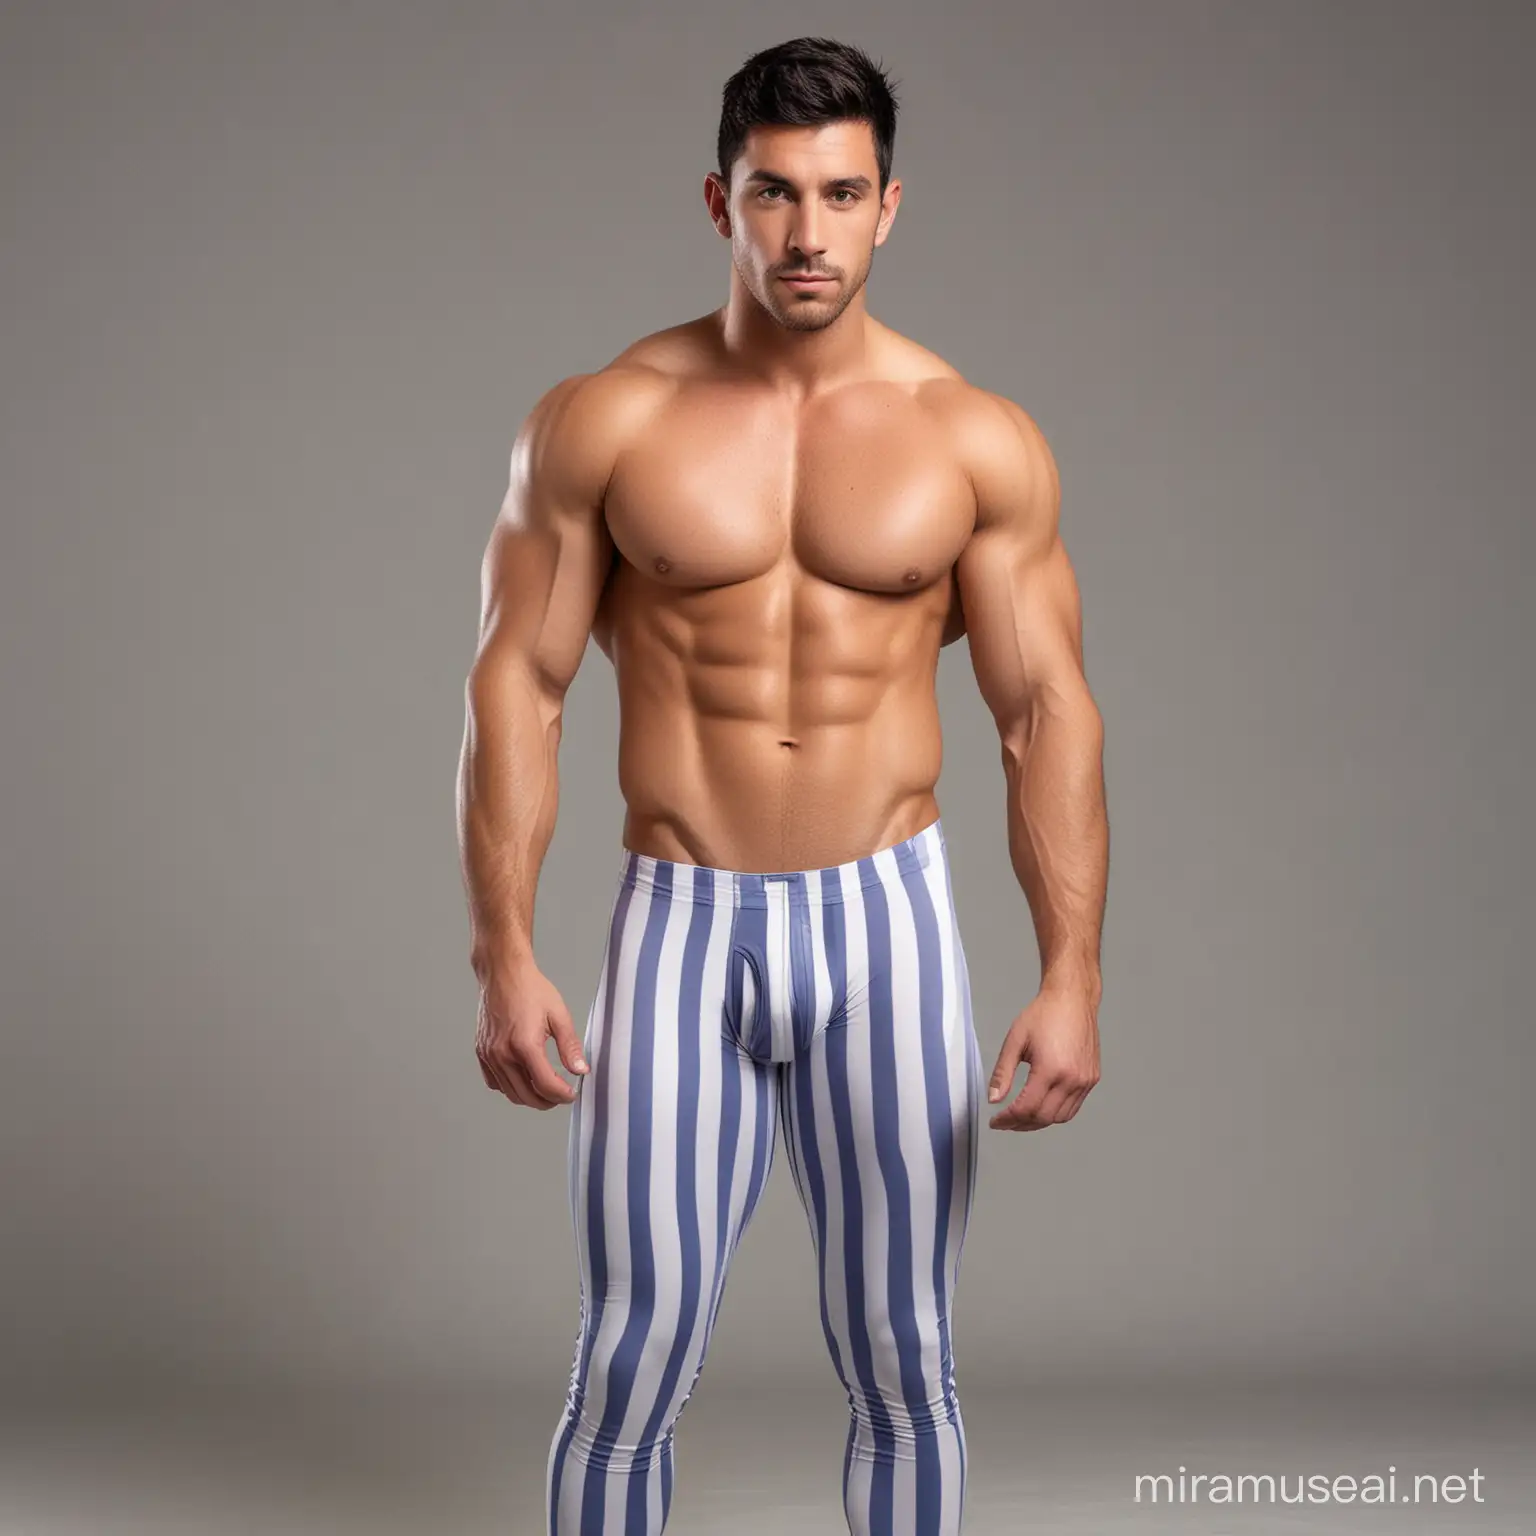 Muscular Argentine Man in Periwinkle Leggings Rear View Portrait